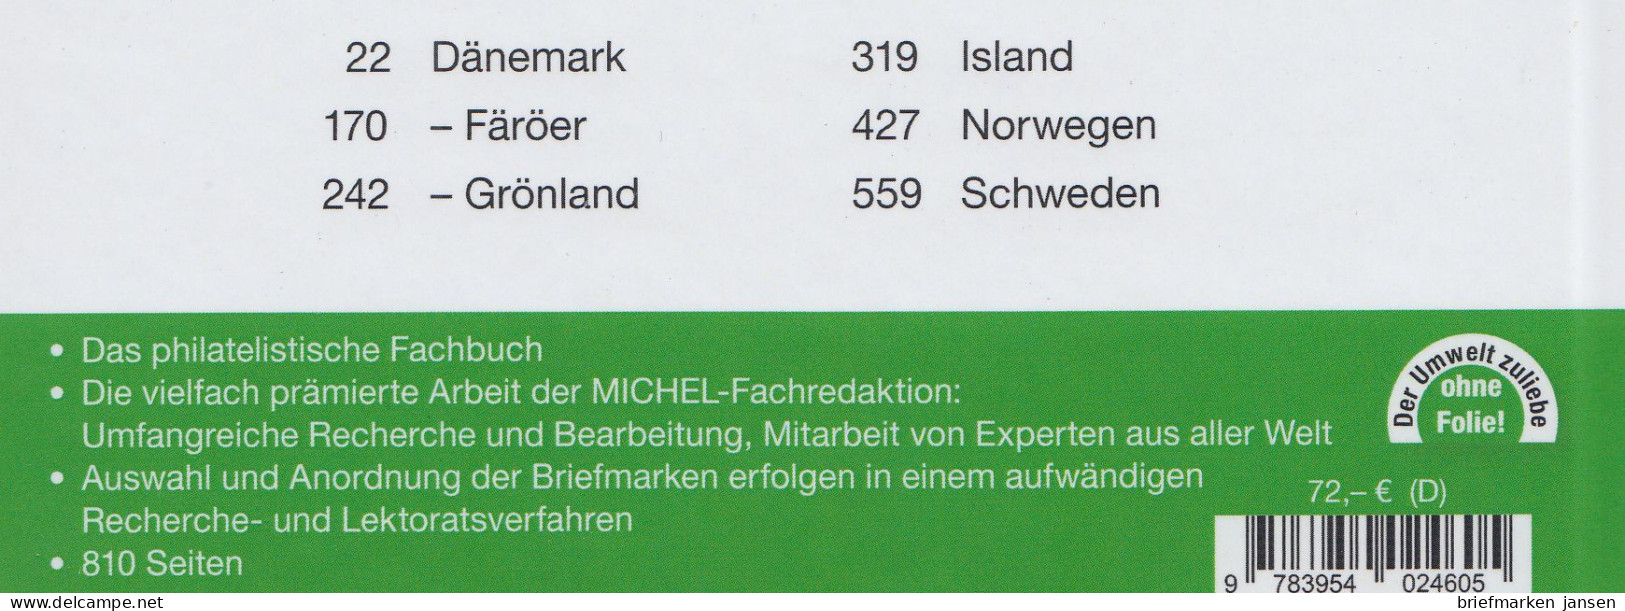 Michel Europa Katalog Band 10 - Skandinavien 2023/2024, 108. Auflage - Oostenrijk